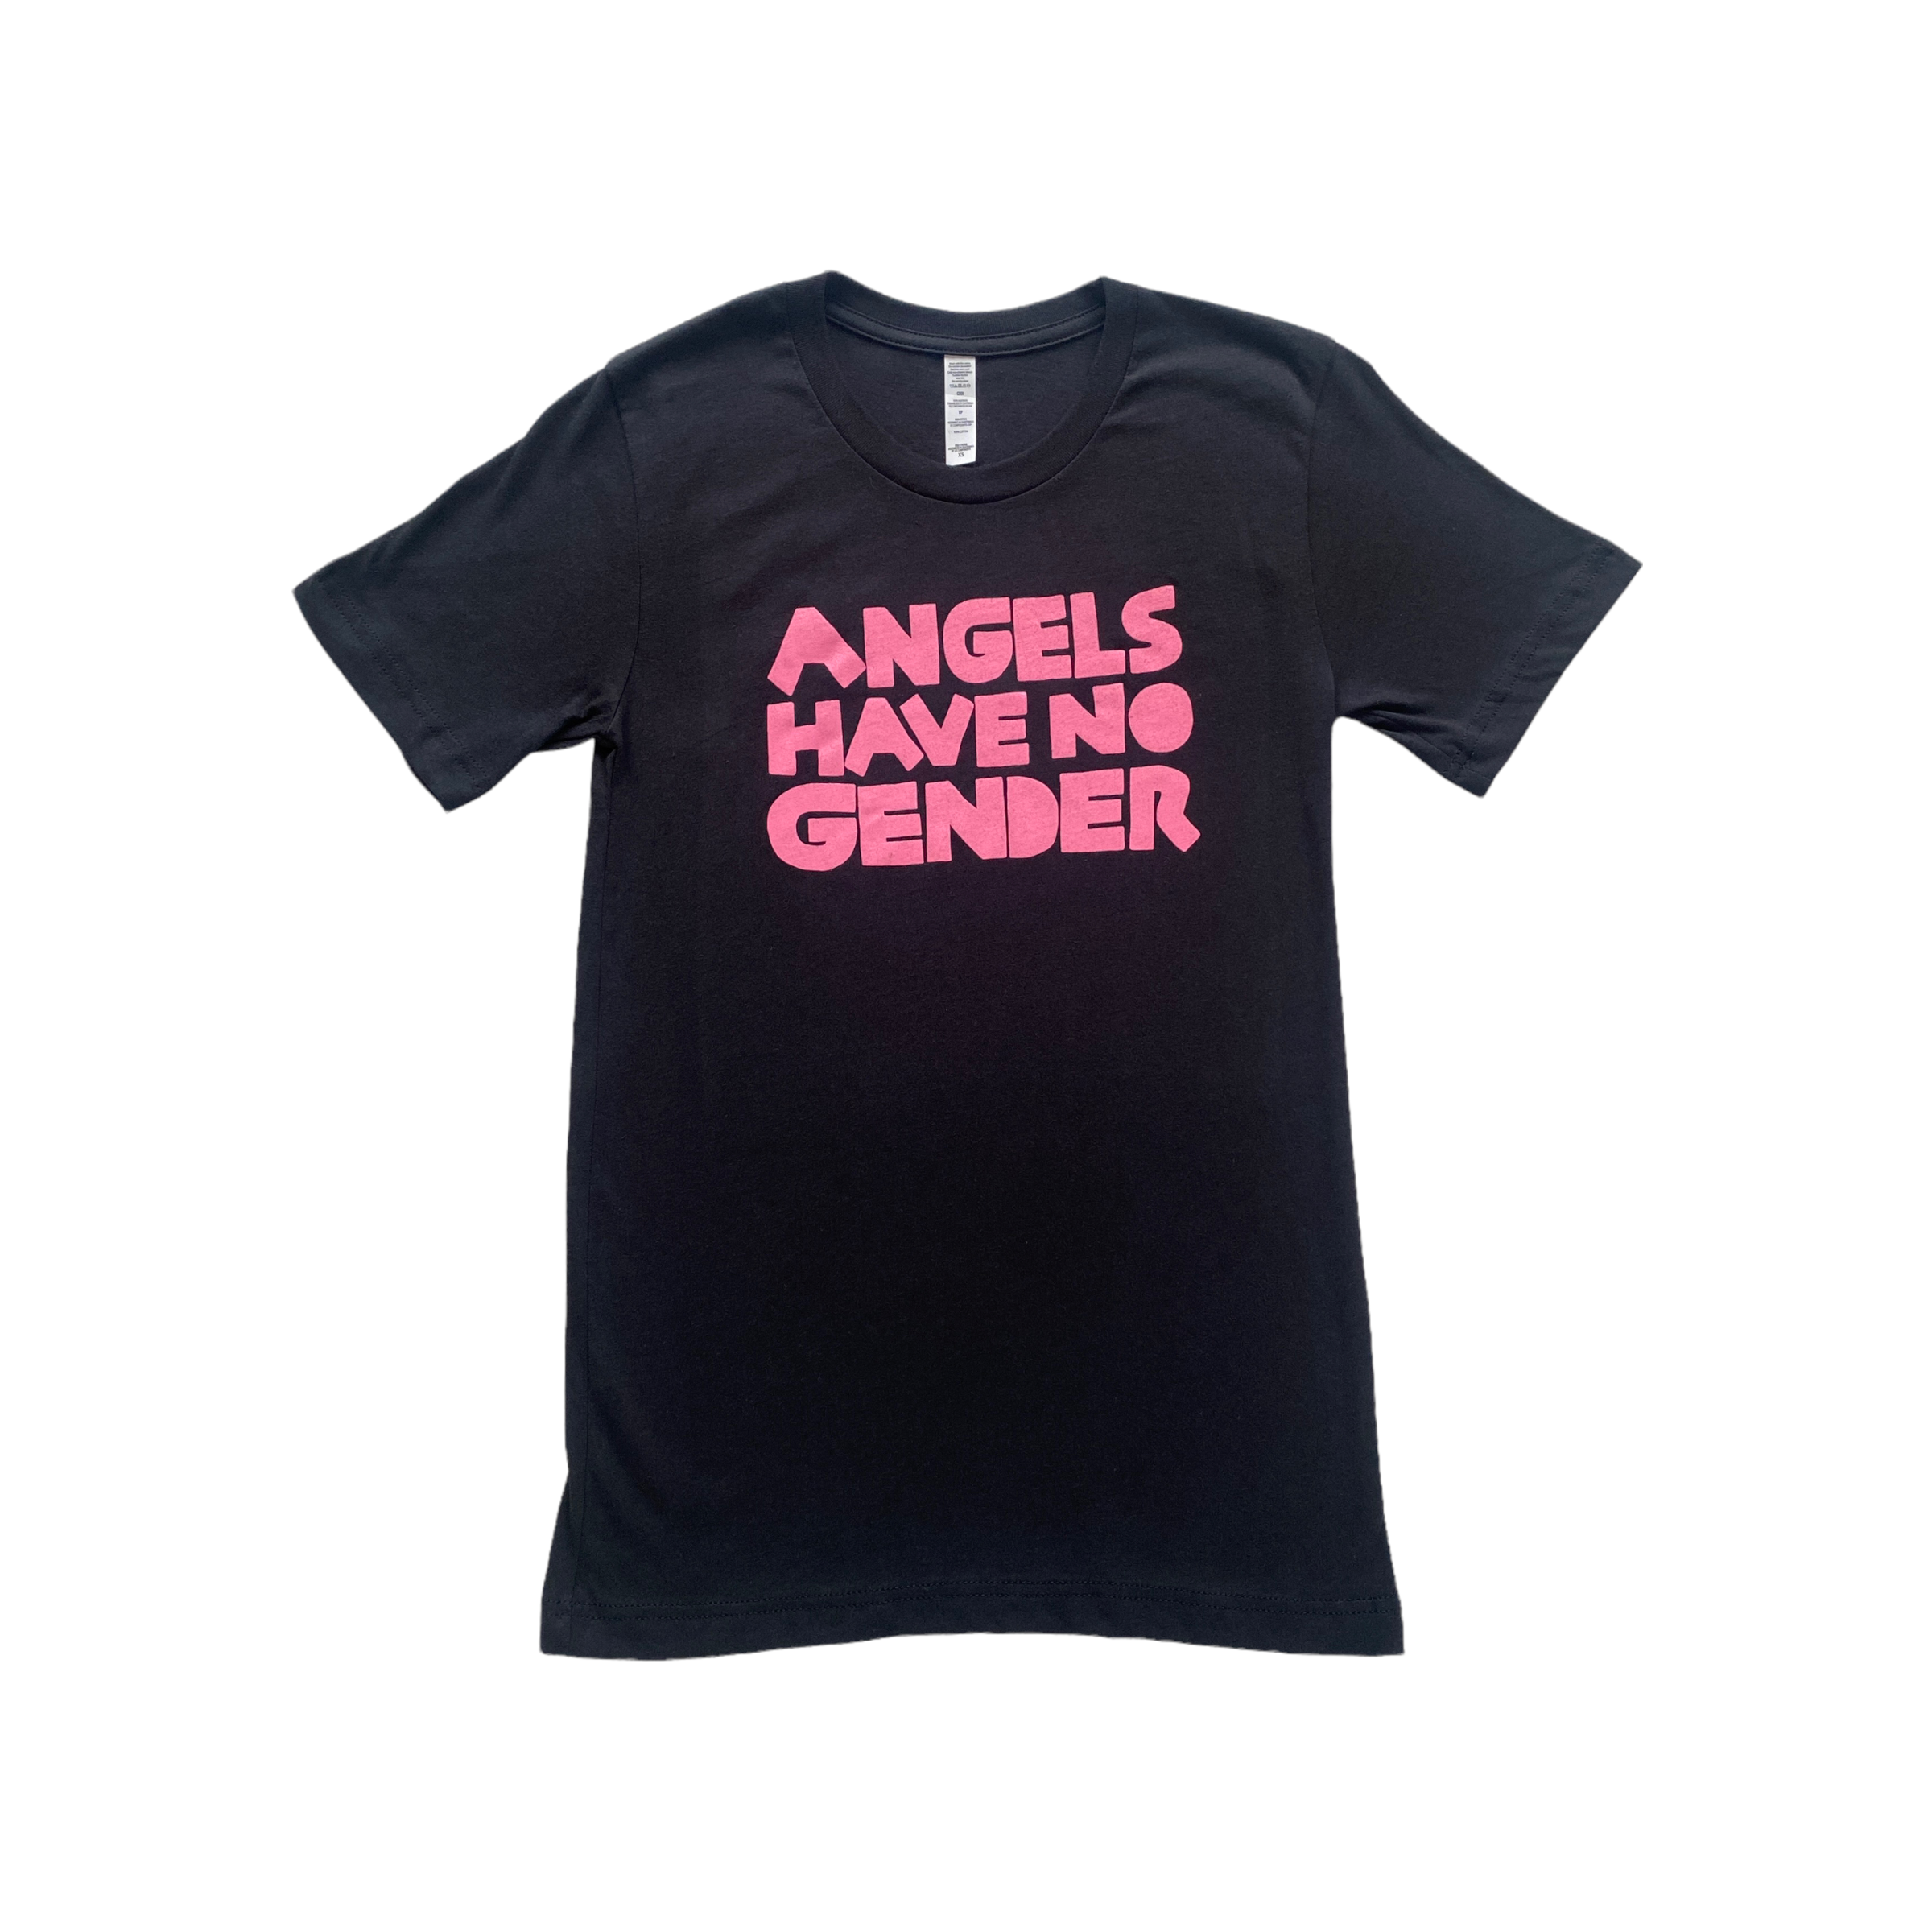 ANGELS HAVE NO GENDER (SFW) T-shirt